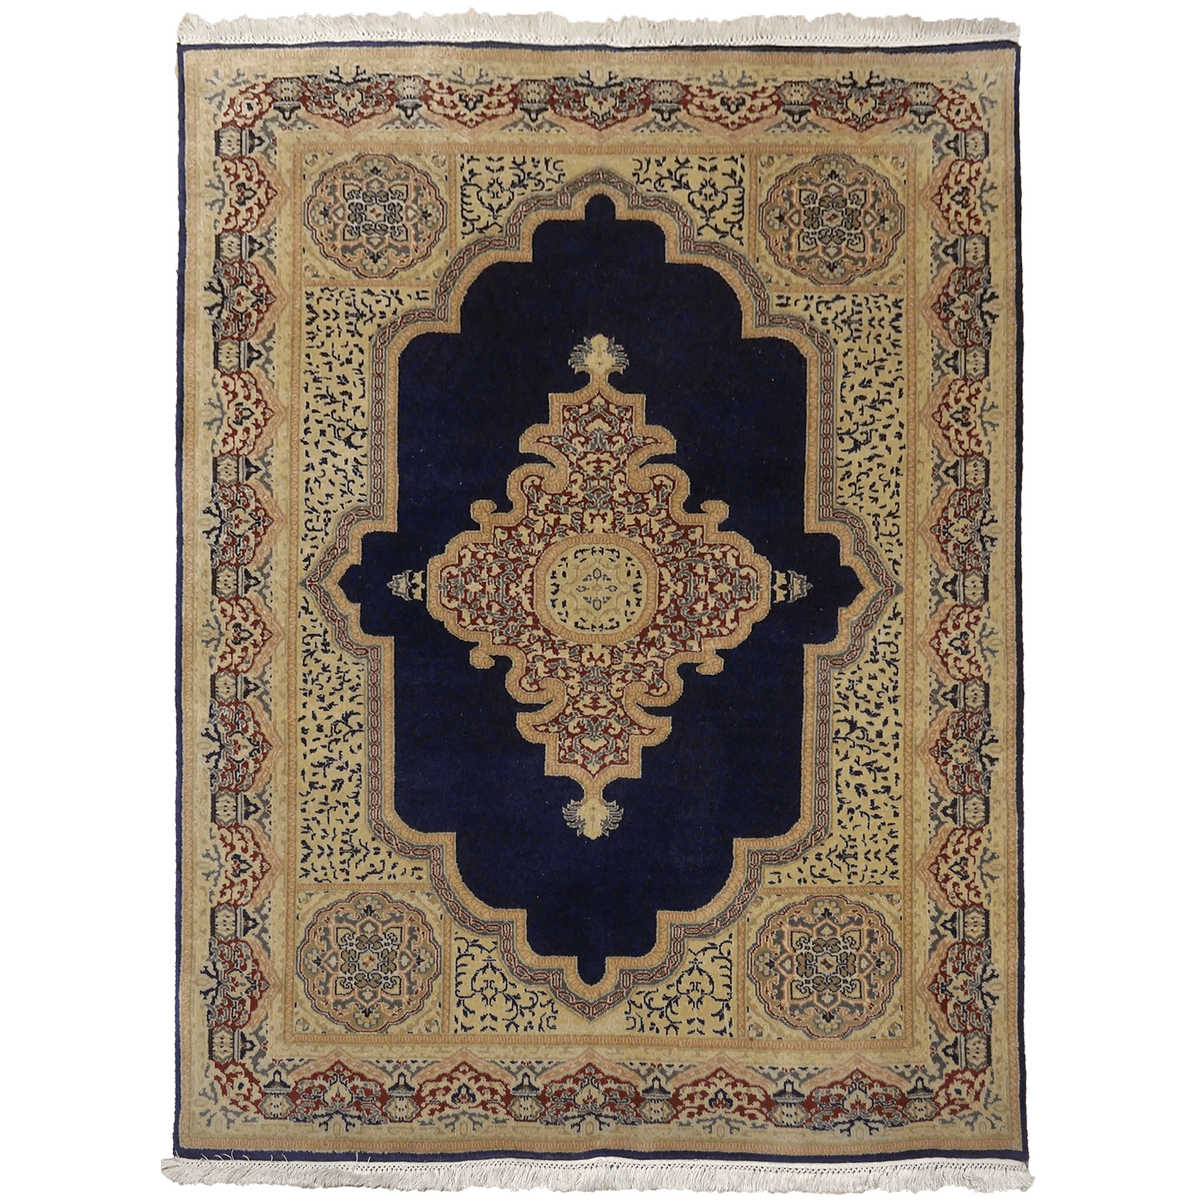 Geruststellen Gebruikelijk Wonen Perzisch tapijt handgeknoopt - 197 x 139 cm - Beige, Goud, Blauw - Wol —  Orientalized